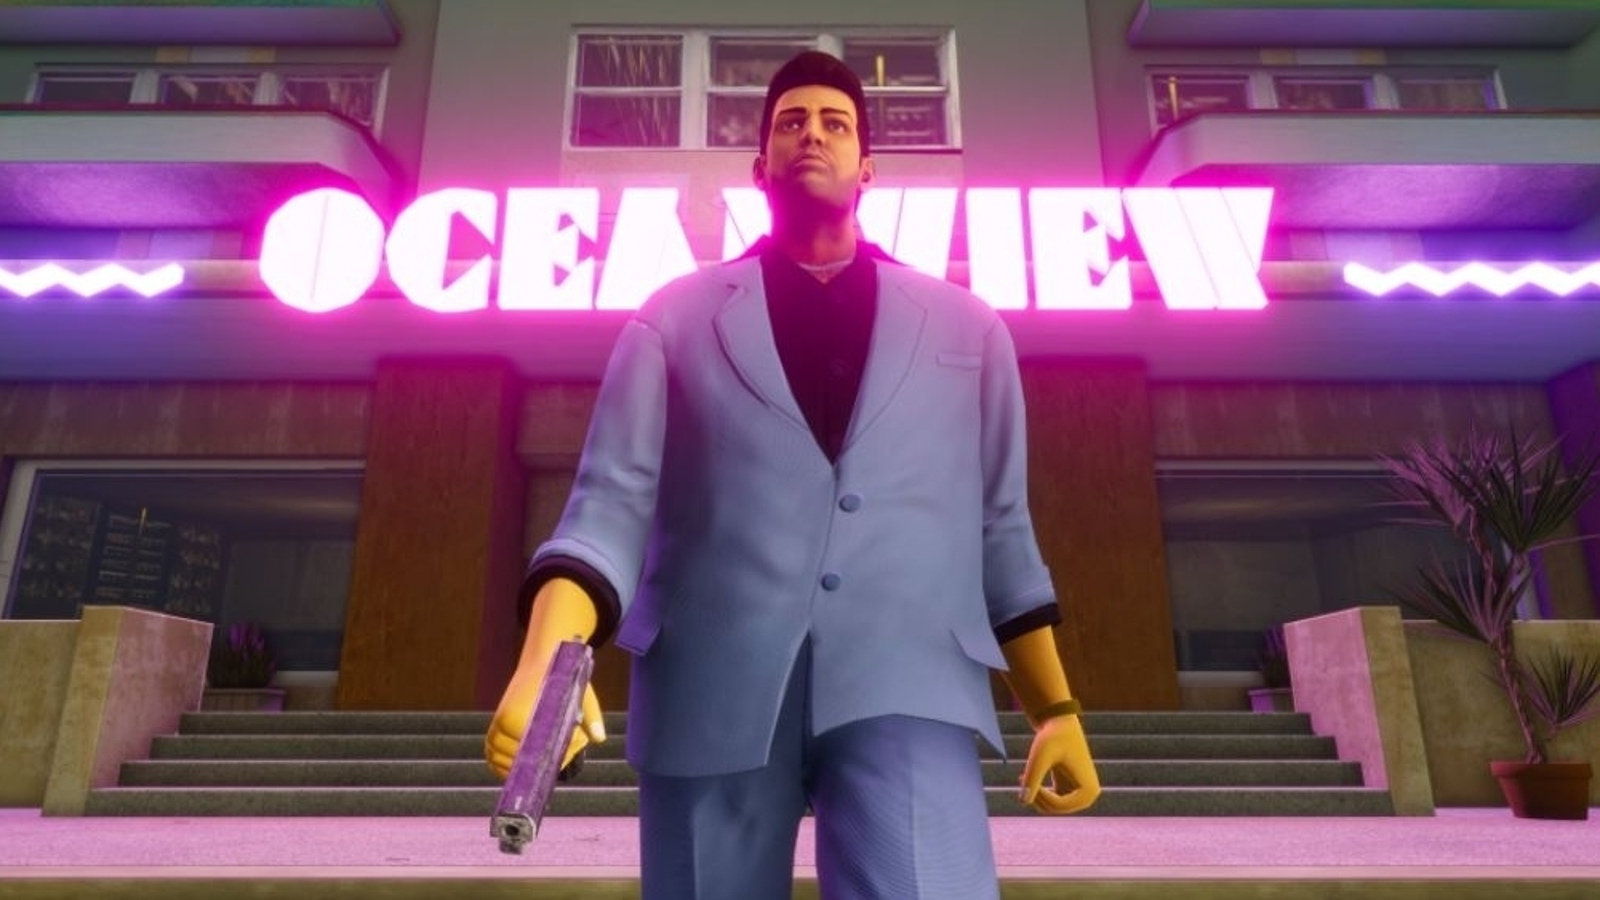 GTA: Vice City, Software